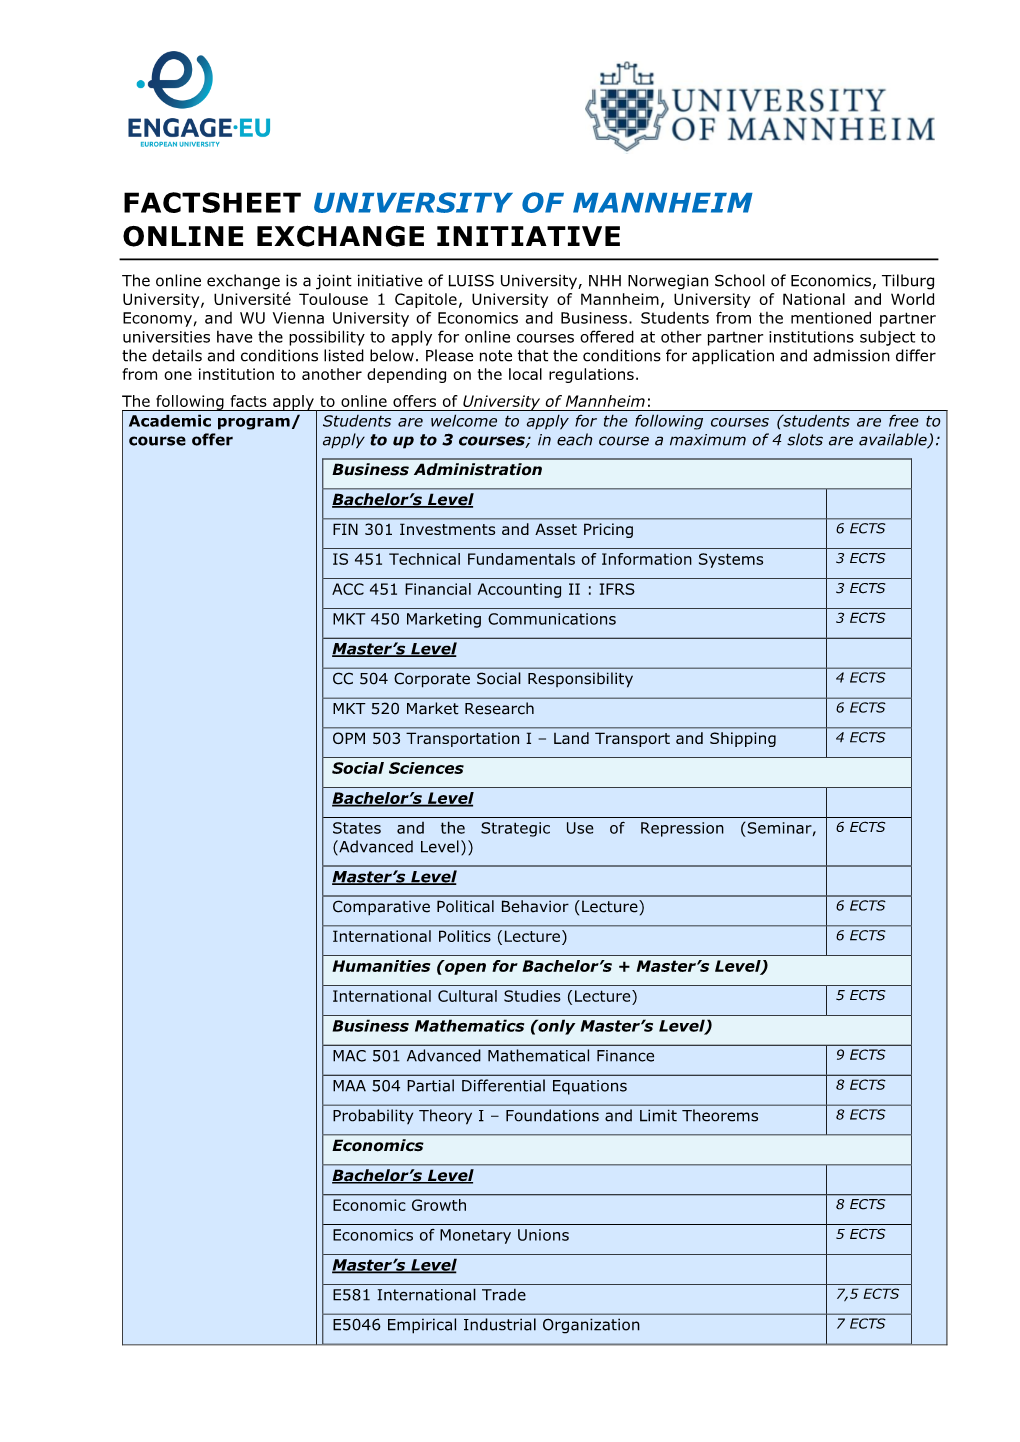 Factsheet University of Mannheim Online Exchange Initiative